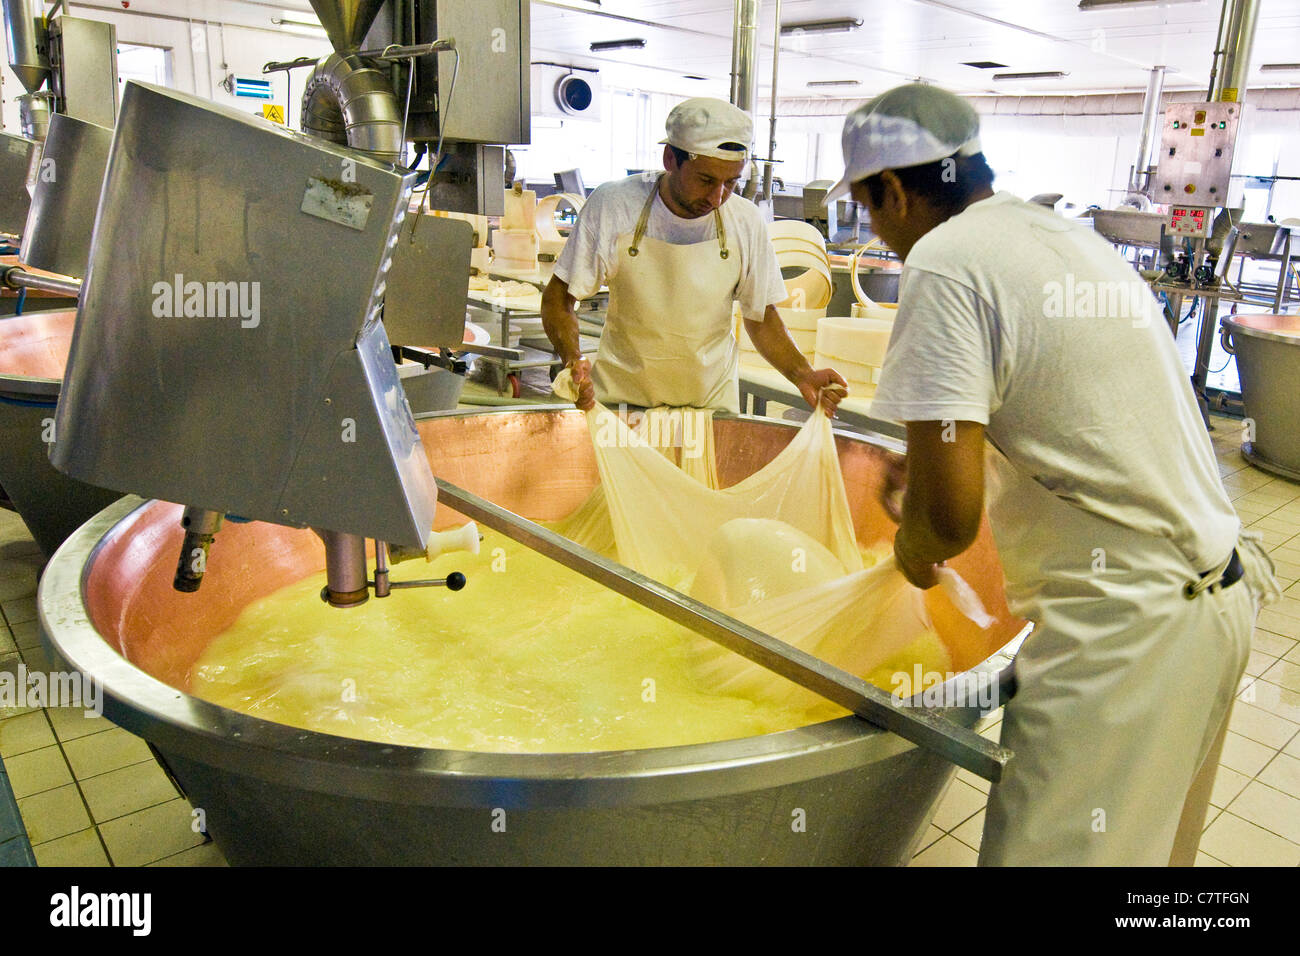 https://c8.alamy.com/comp/C7TFGN/italy-emilia-romagna-castelnuovo-rangone-making-of-parmesan-cheese-C7TFGN.jpg